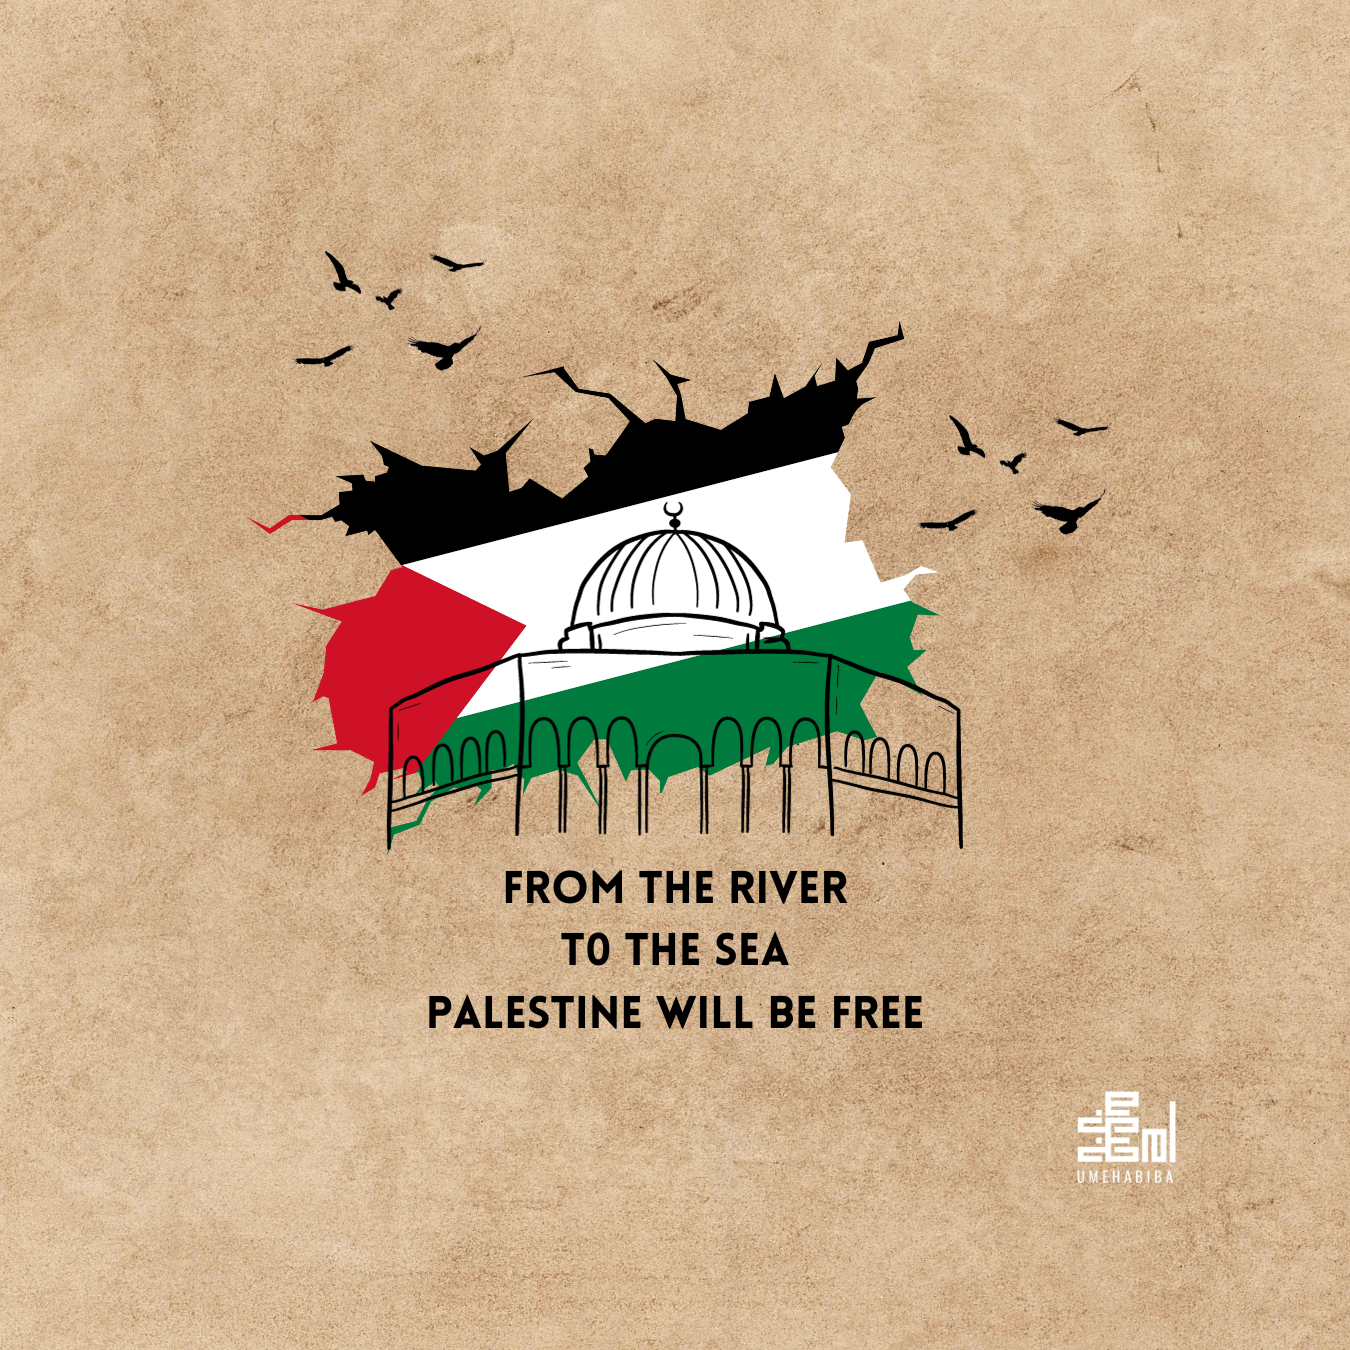 Free Palestine by Ume Habiba on Dribbble